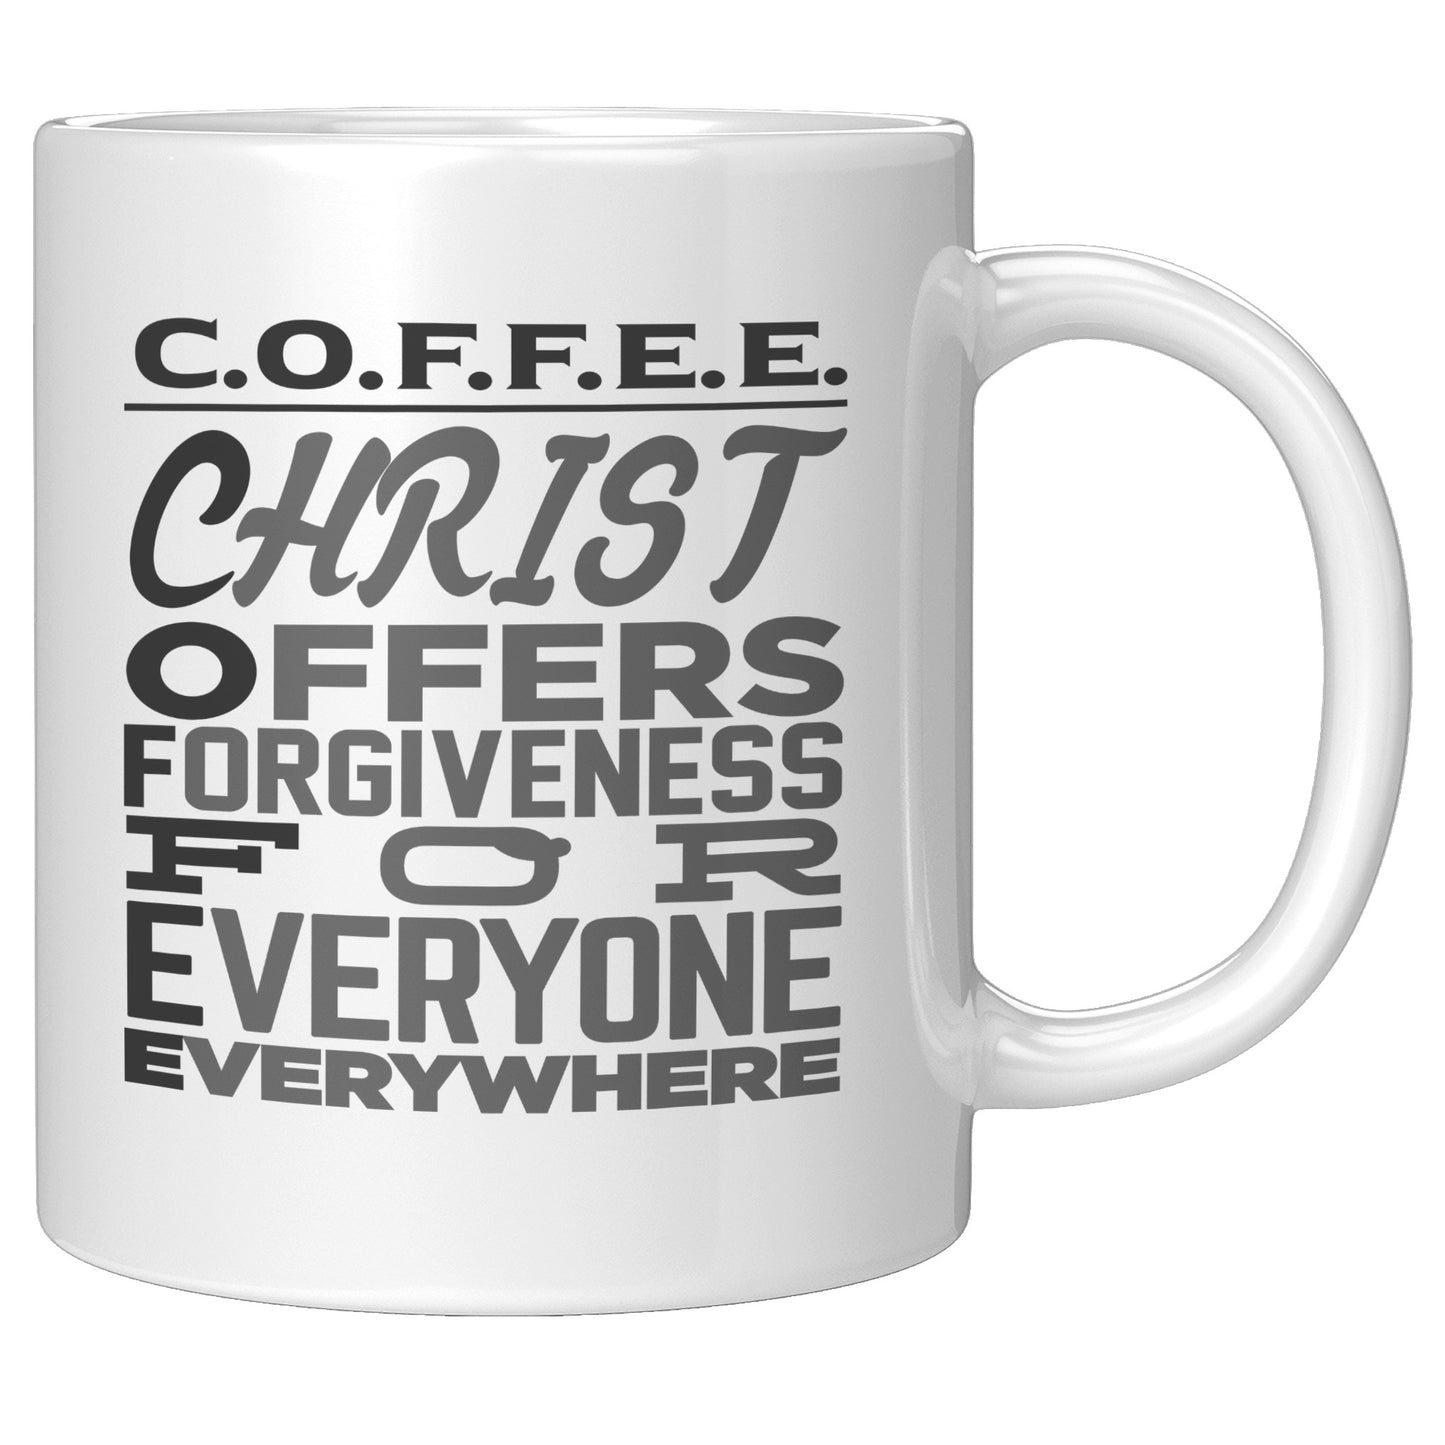 C.O.F.F.E.E. Christ Offers Forgiveness Everywhere Coffee Mug